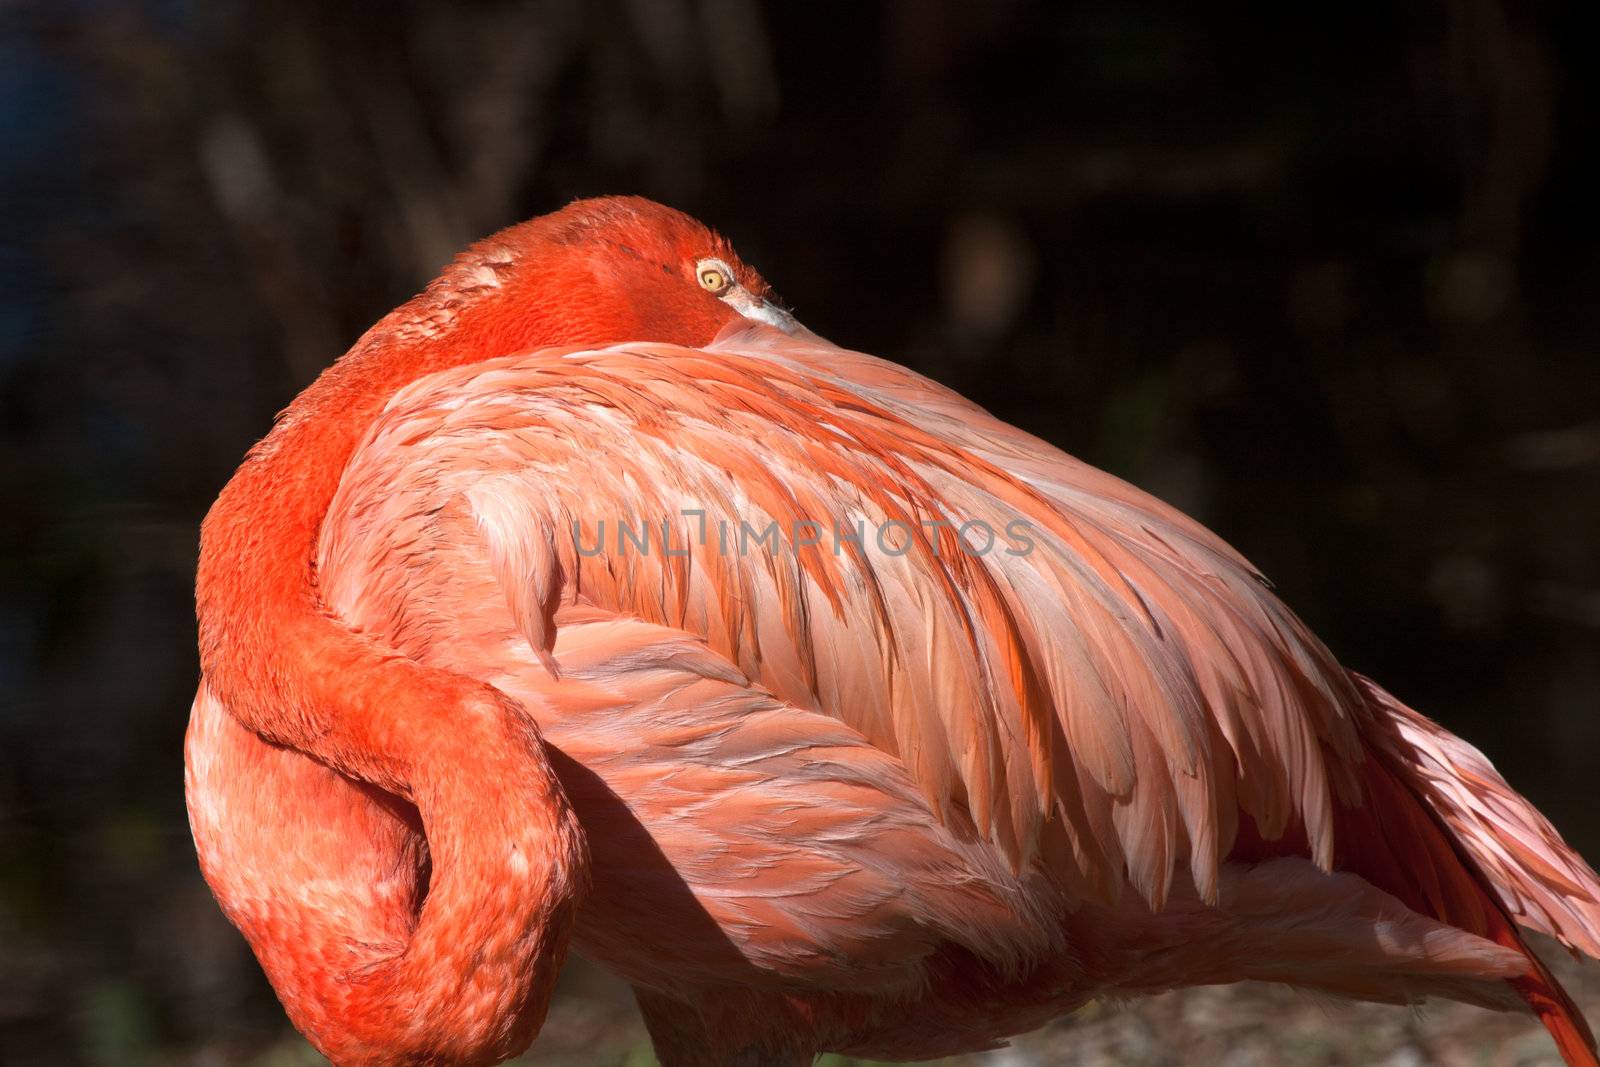 Close up on a sleeping flamingo